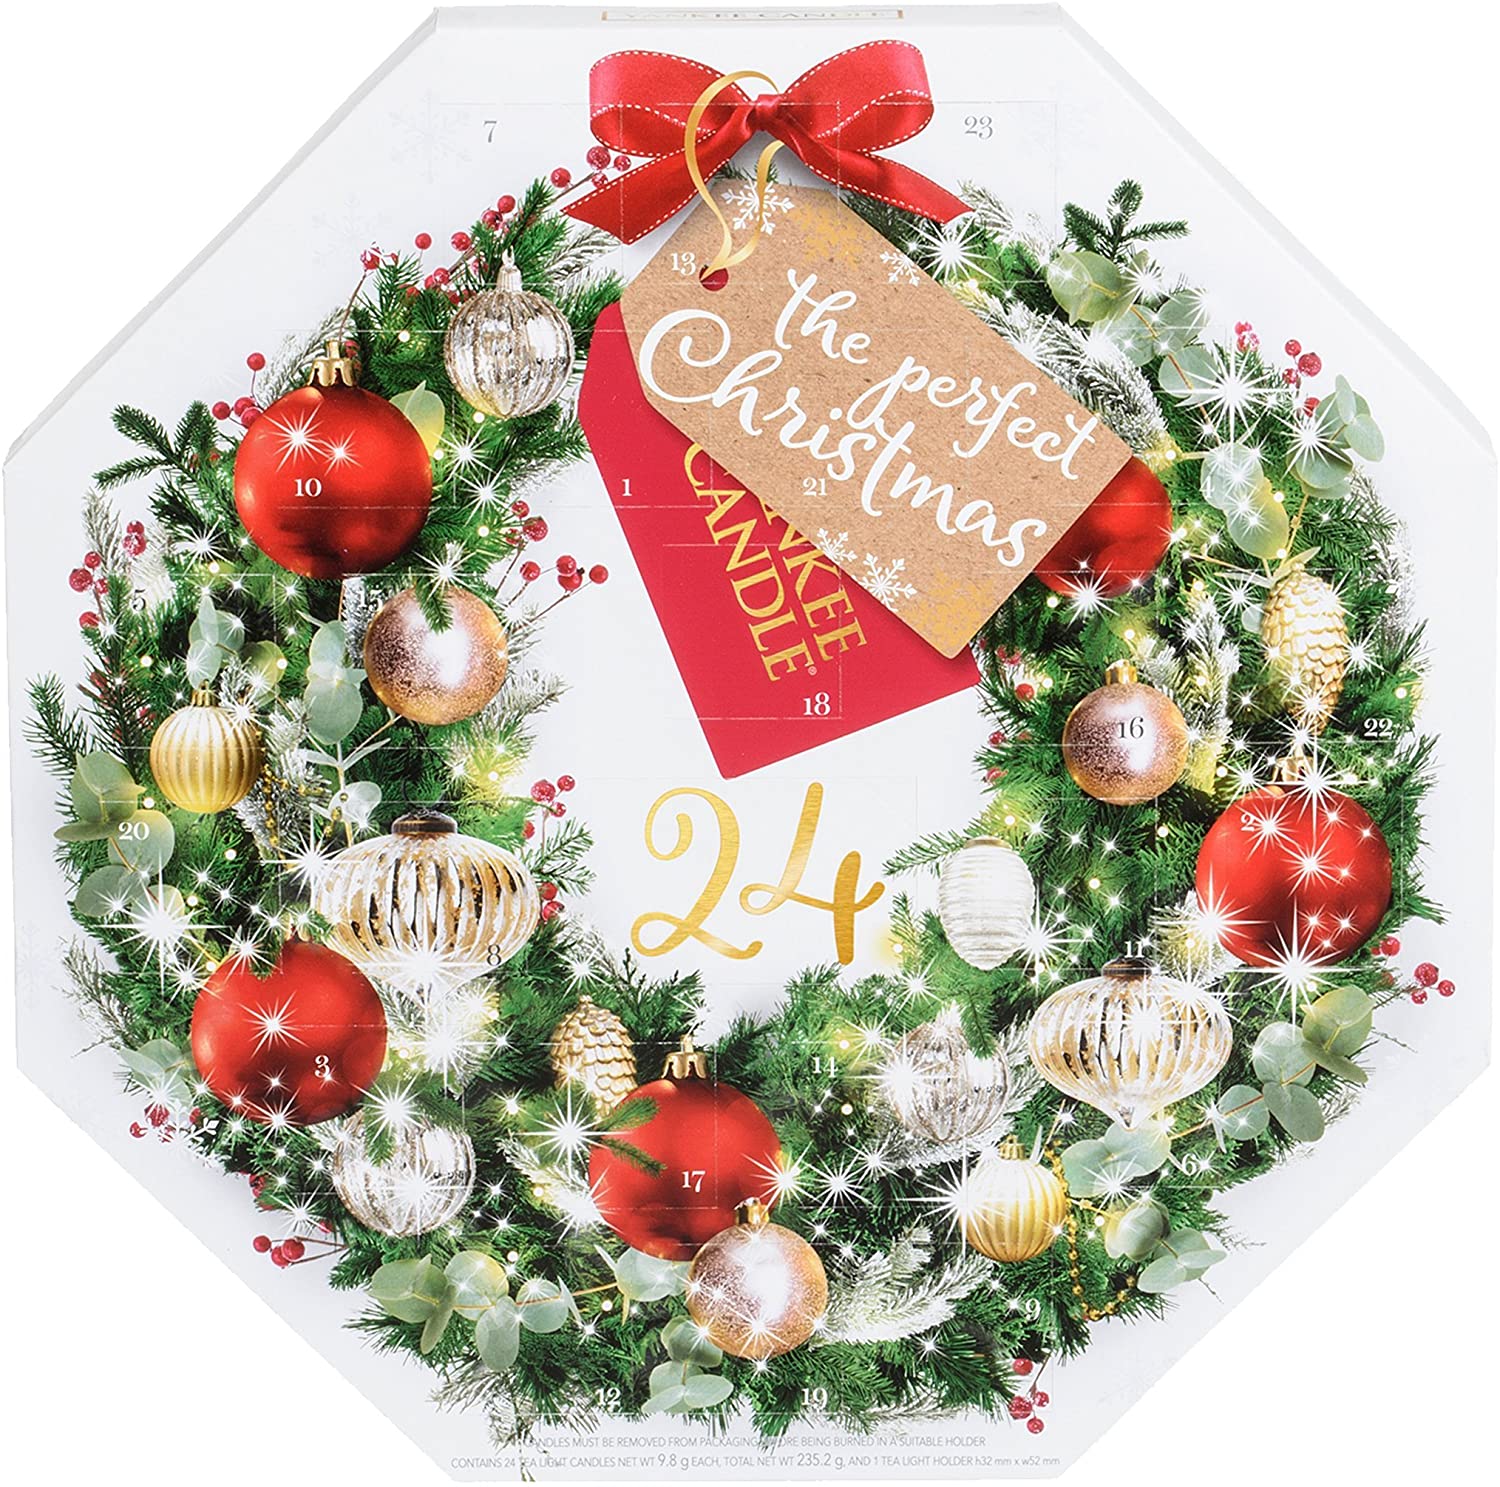 Yankee Candle Advent Calendar Wreath